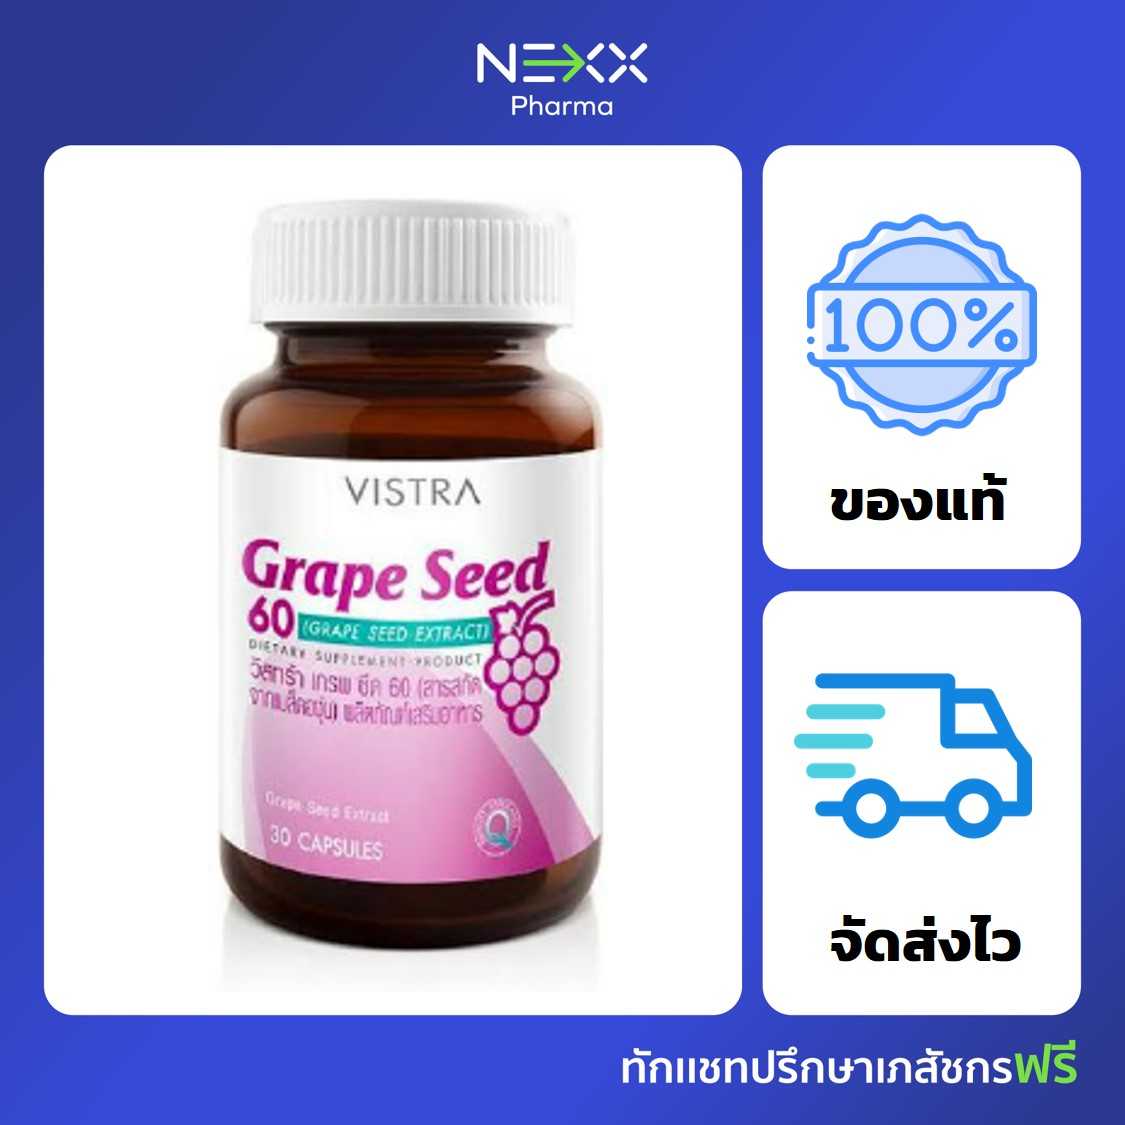 Vistra Grape Seed วิสตร้า สารสกัดจากเมล็ดองุ่น 60 mg. (30 เม็ด)